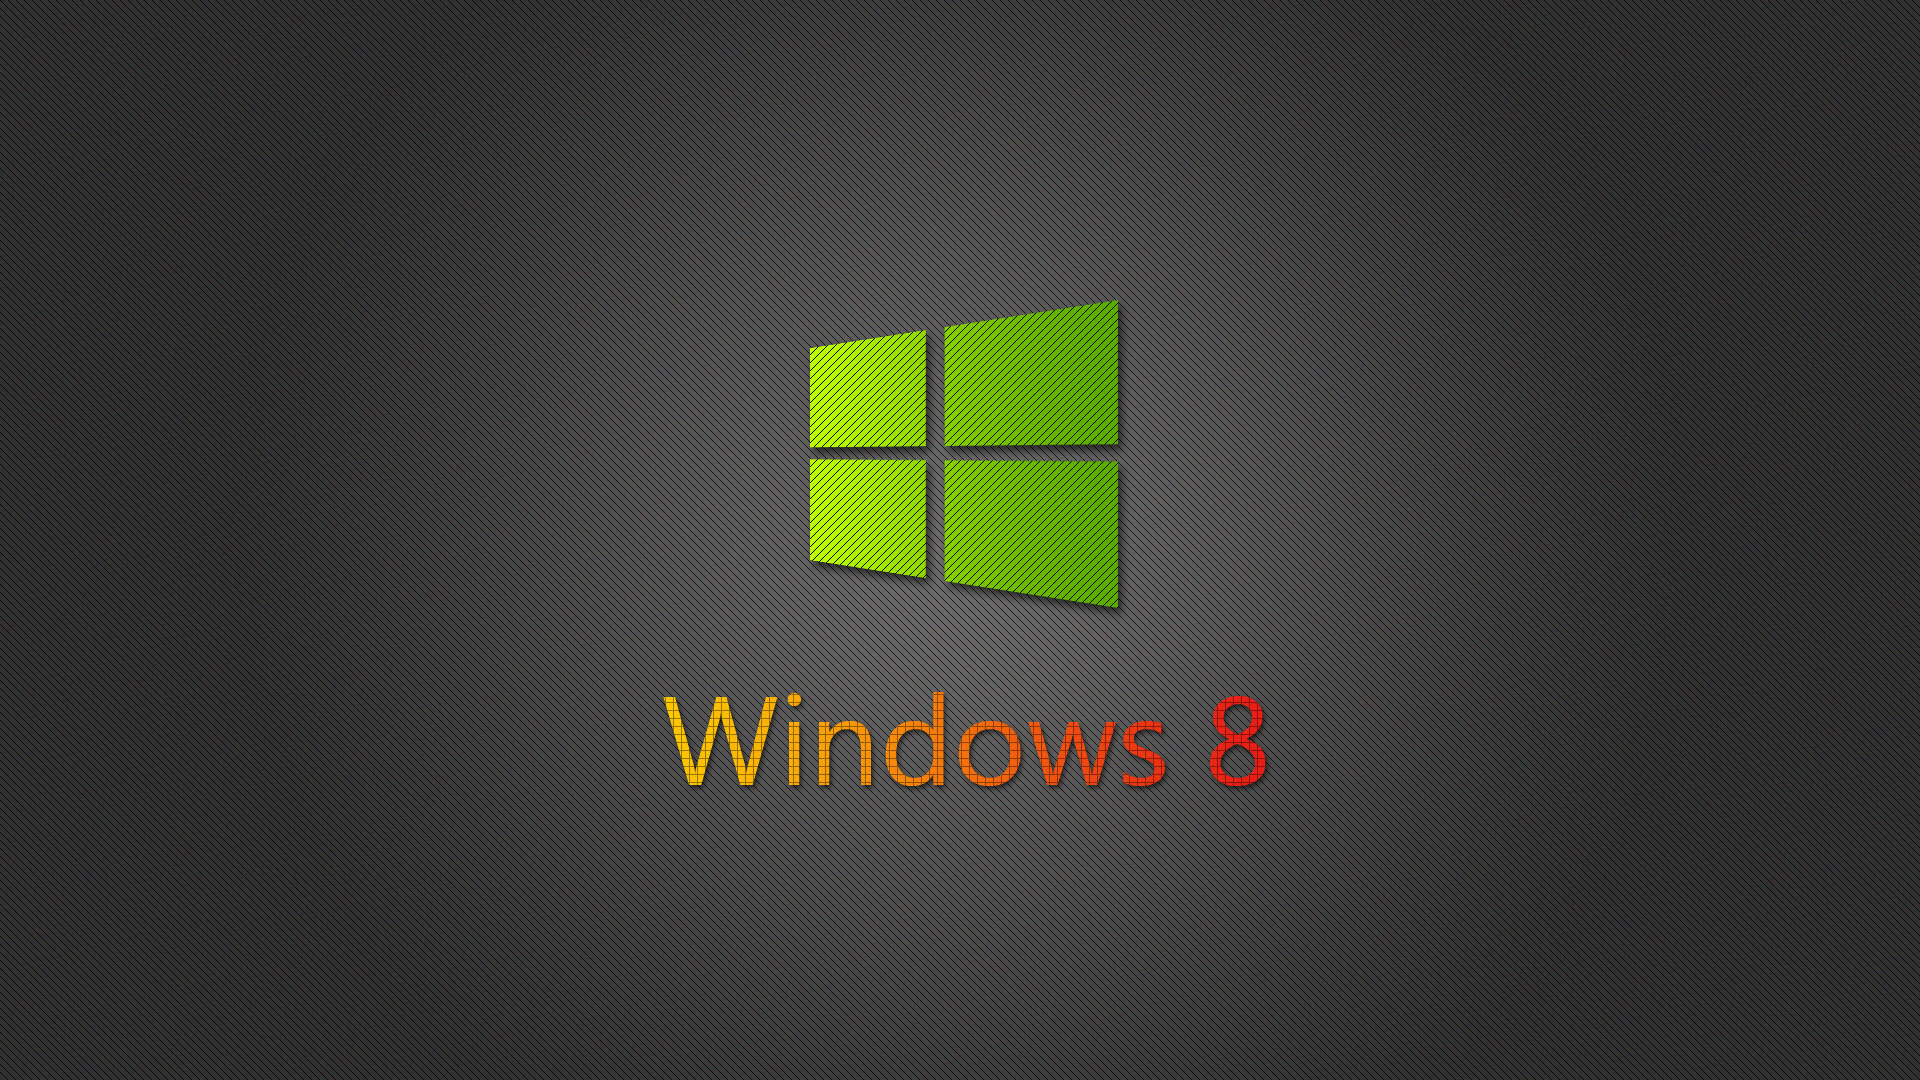 Windows 8 Black Wallpaper HD Resolution for Desktop - Uncalke.com